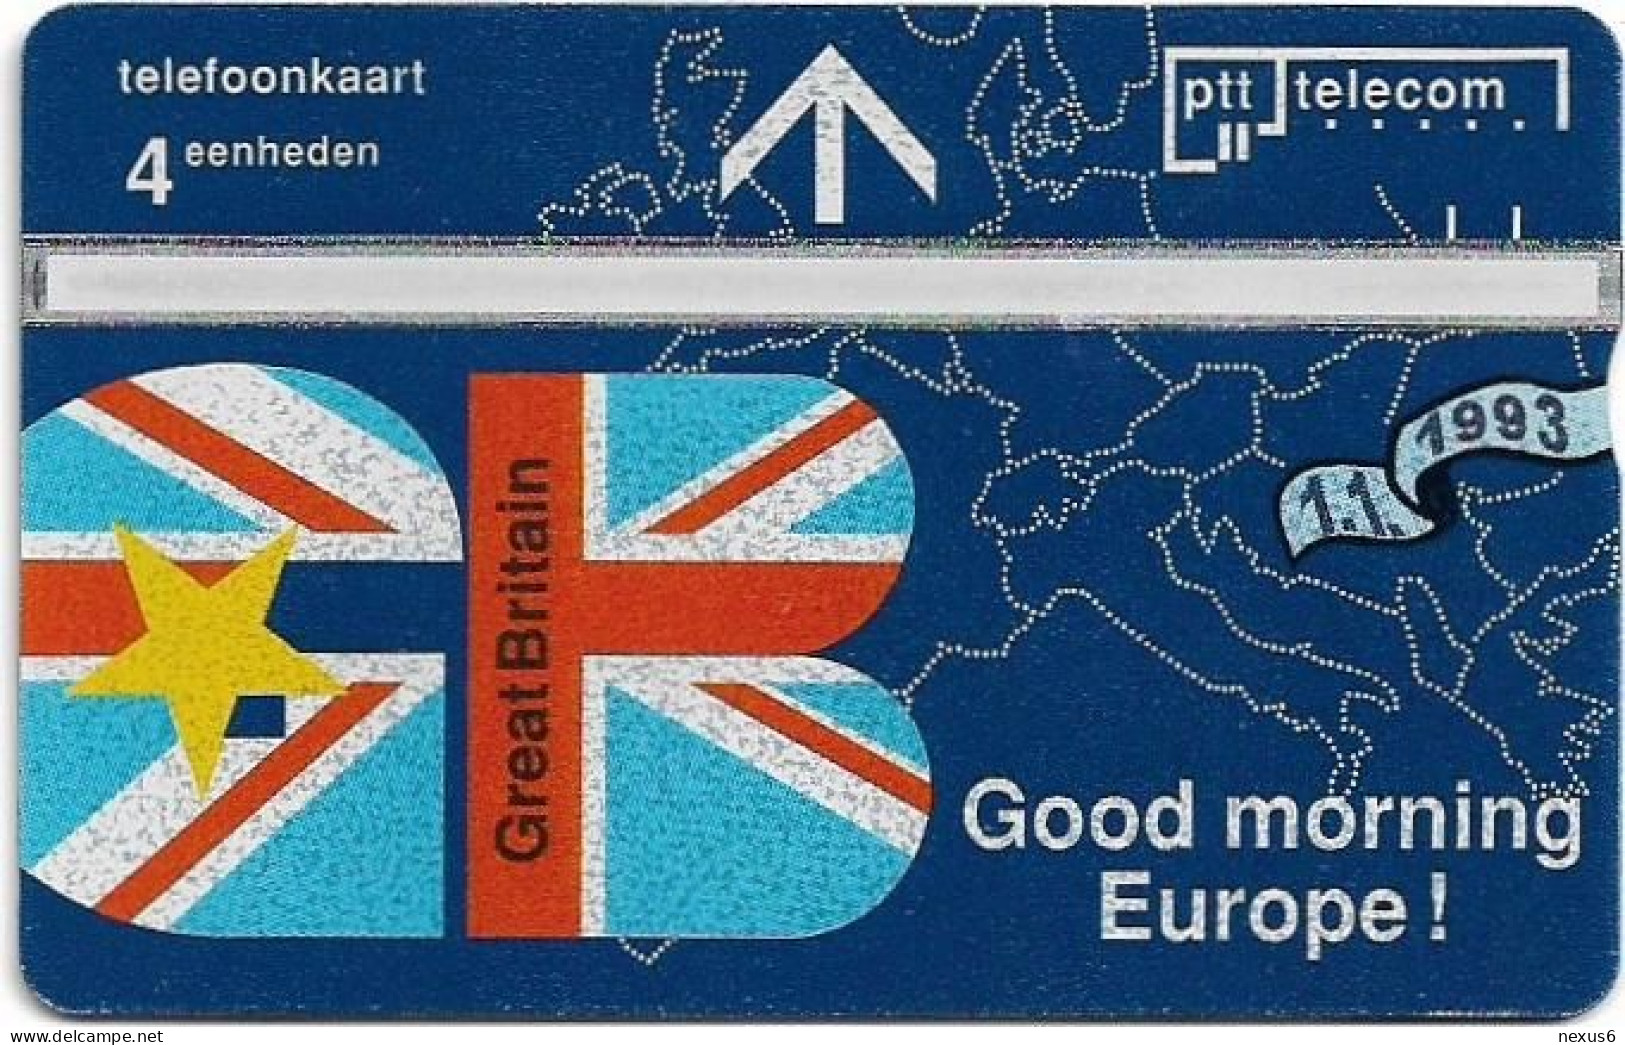 Netherlands - KPN - L&G - R040-11 - Great Britain, Good Morning Europe! - 303L - 03.1993, 4Units, 10.000ex, Mint - Privat